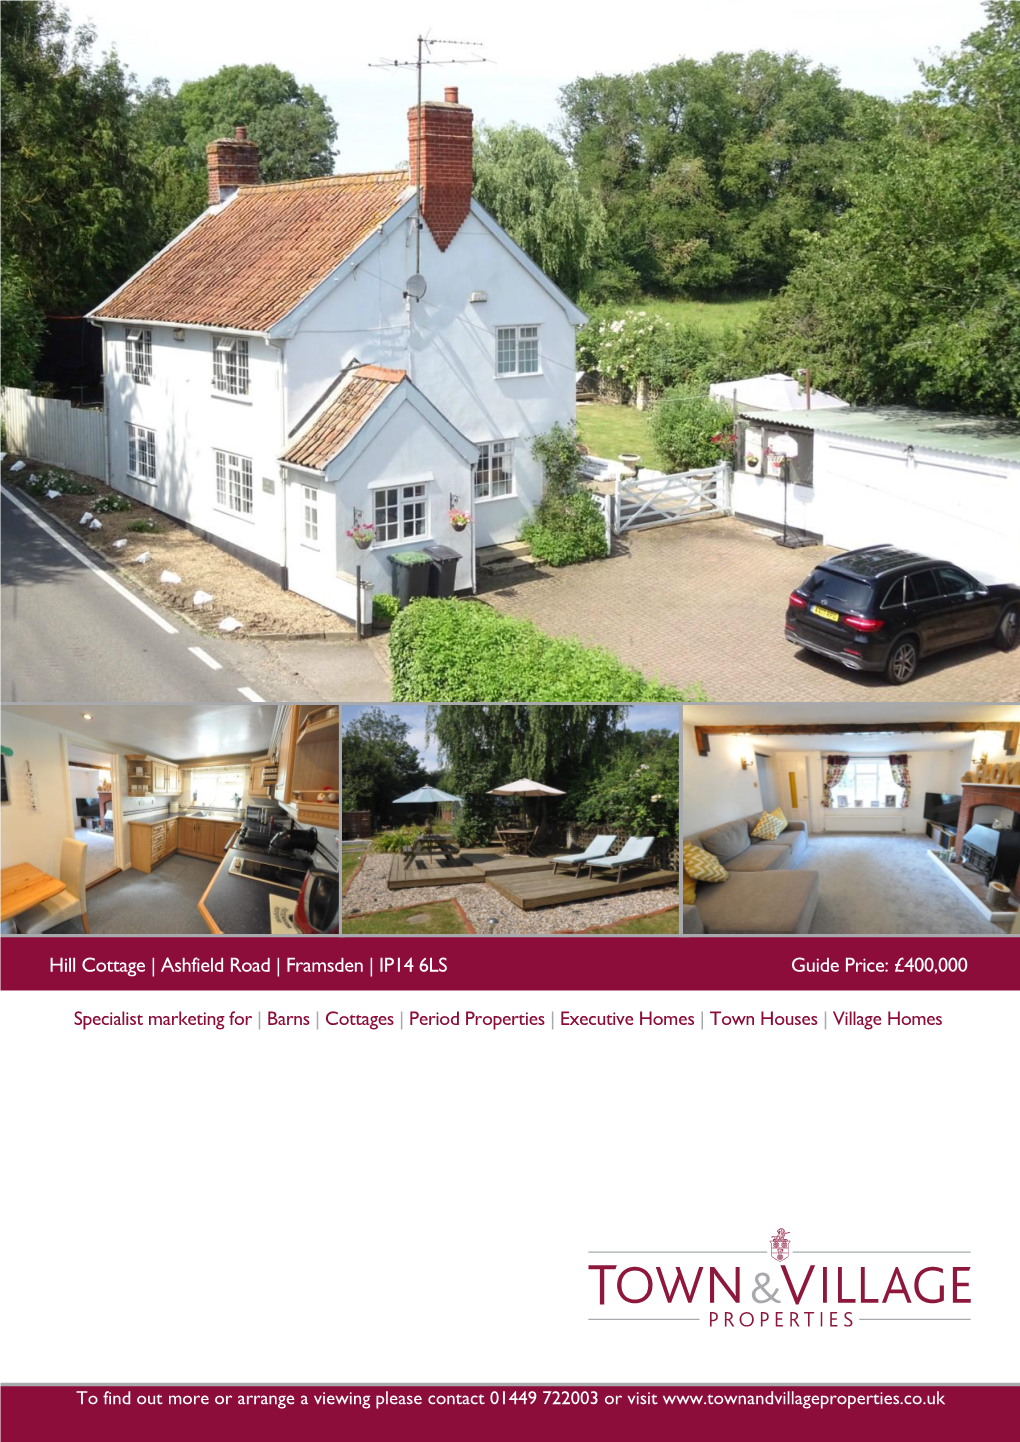 Hill Cottage | Ashfield Road | Framsden | IP14 6LS Guide Price: £400,000